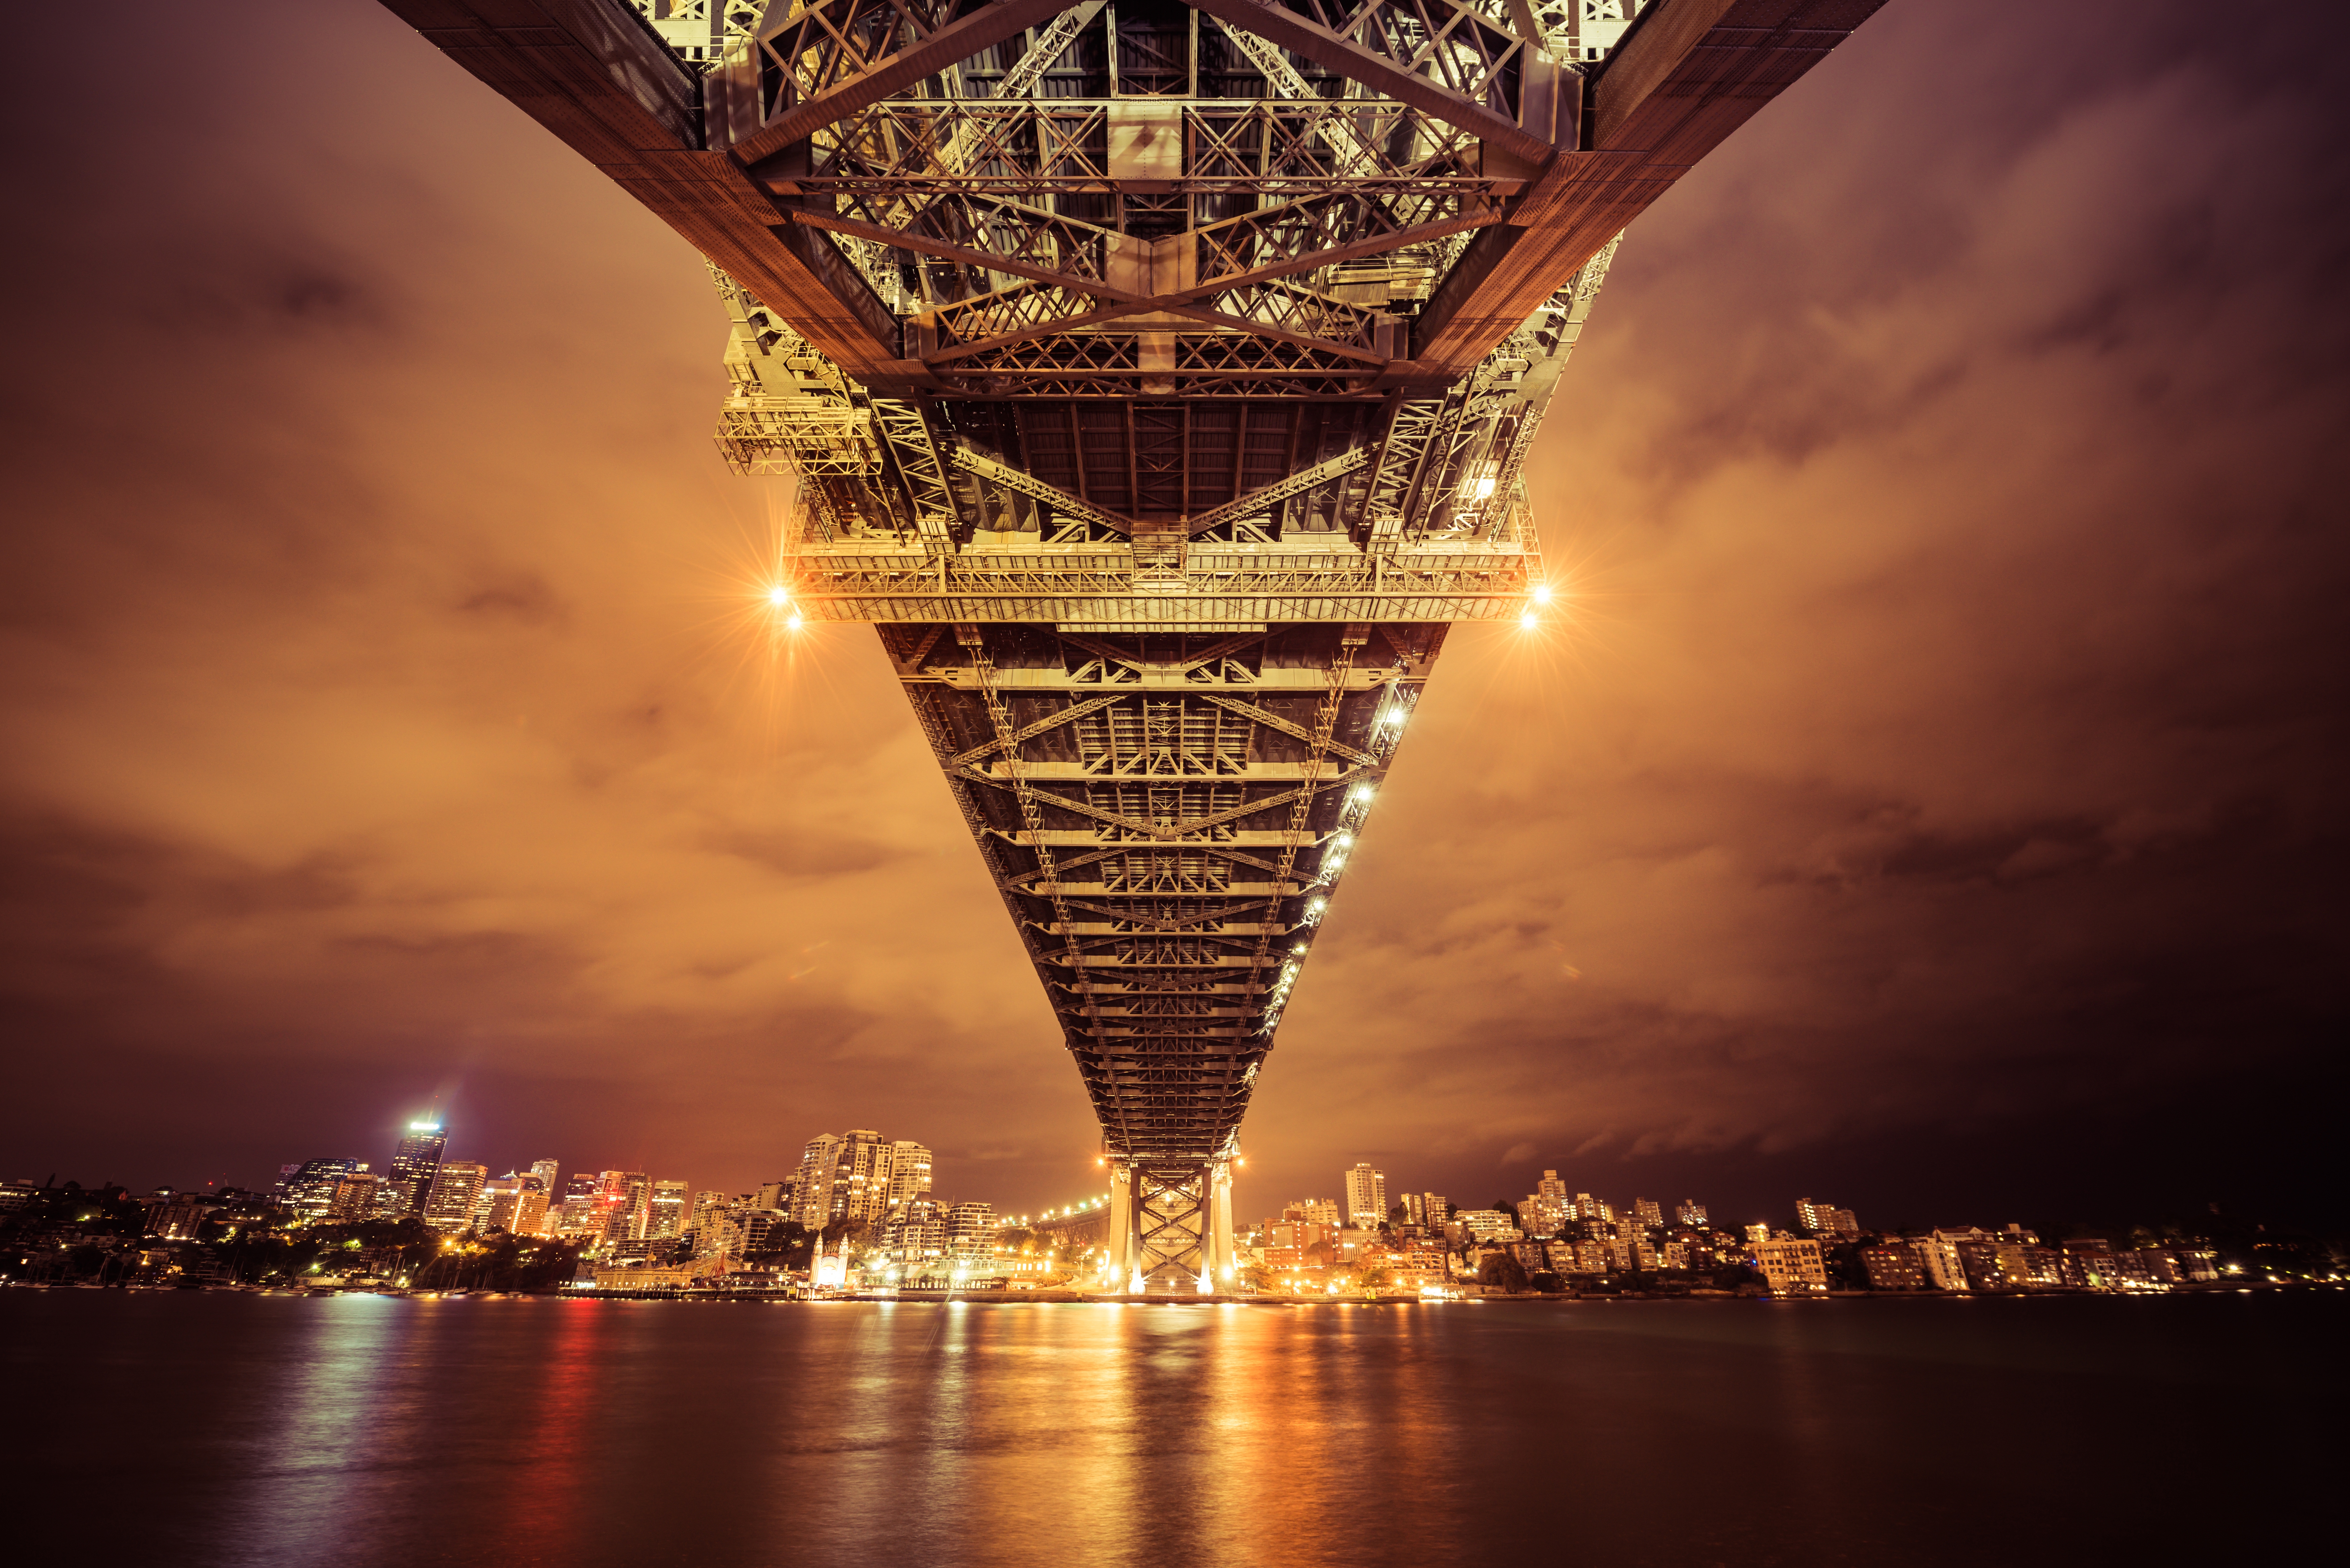 HD wallpaper, Orange, Reflection, 8K, Illuminated, 5K, Cityscape, Australia, Sky View, Sydney Harbour Bridge, City Lights, Bright, Nightscape, River